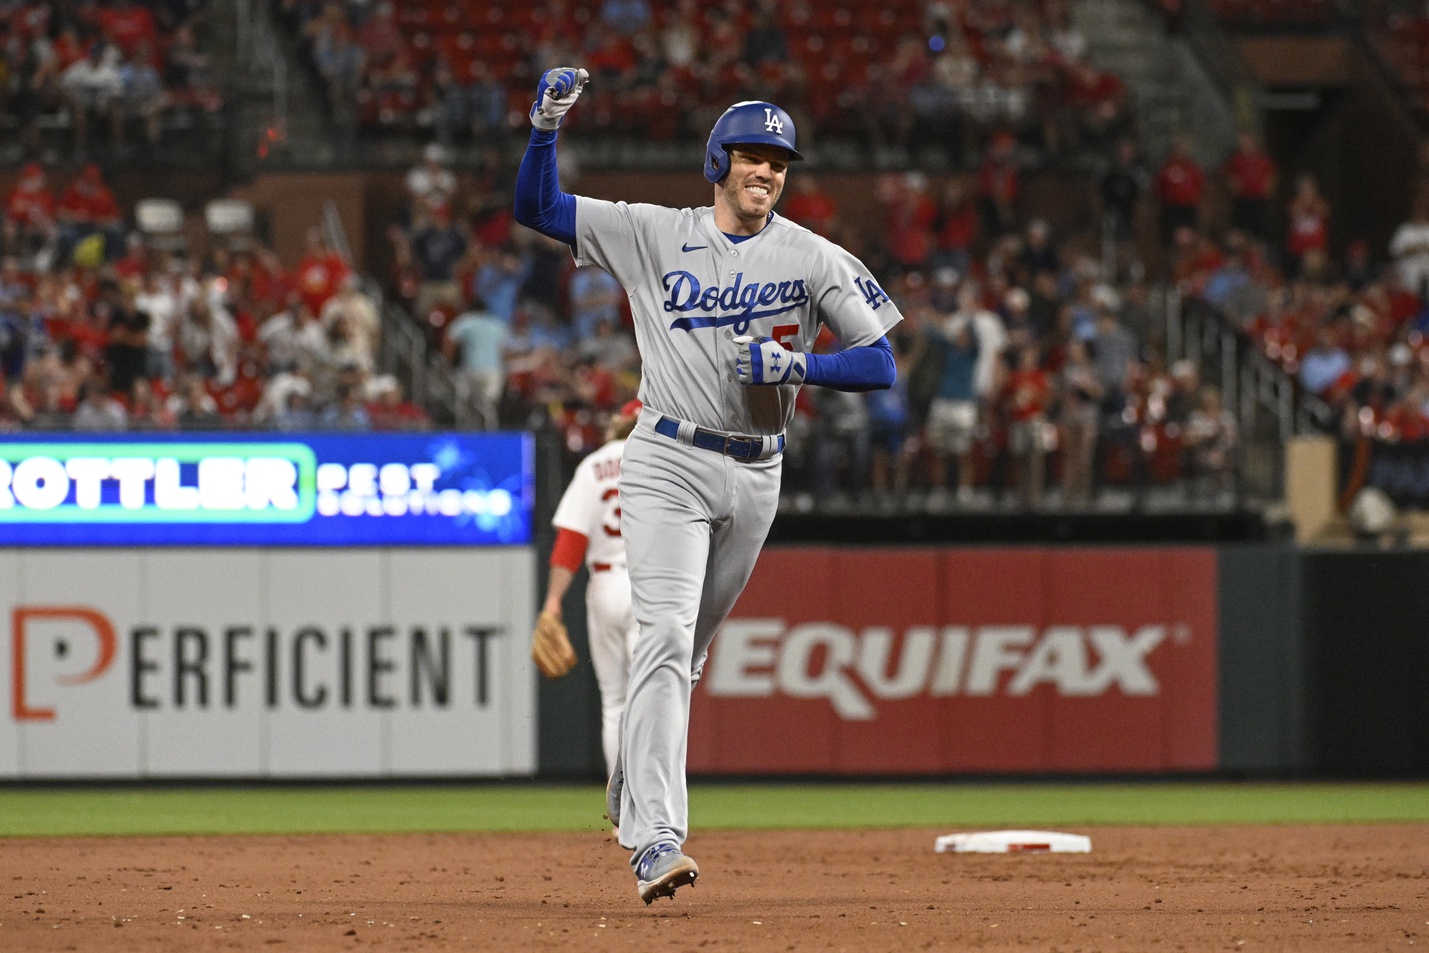 Dodgers' Freddie Freeman's heartwarming take on season-long